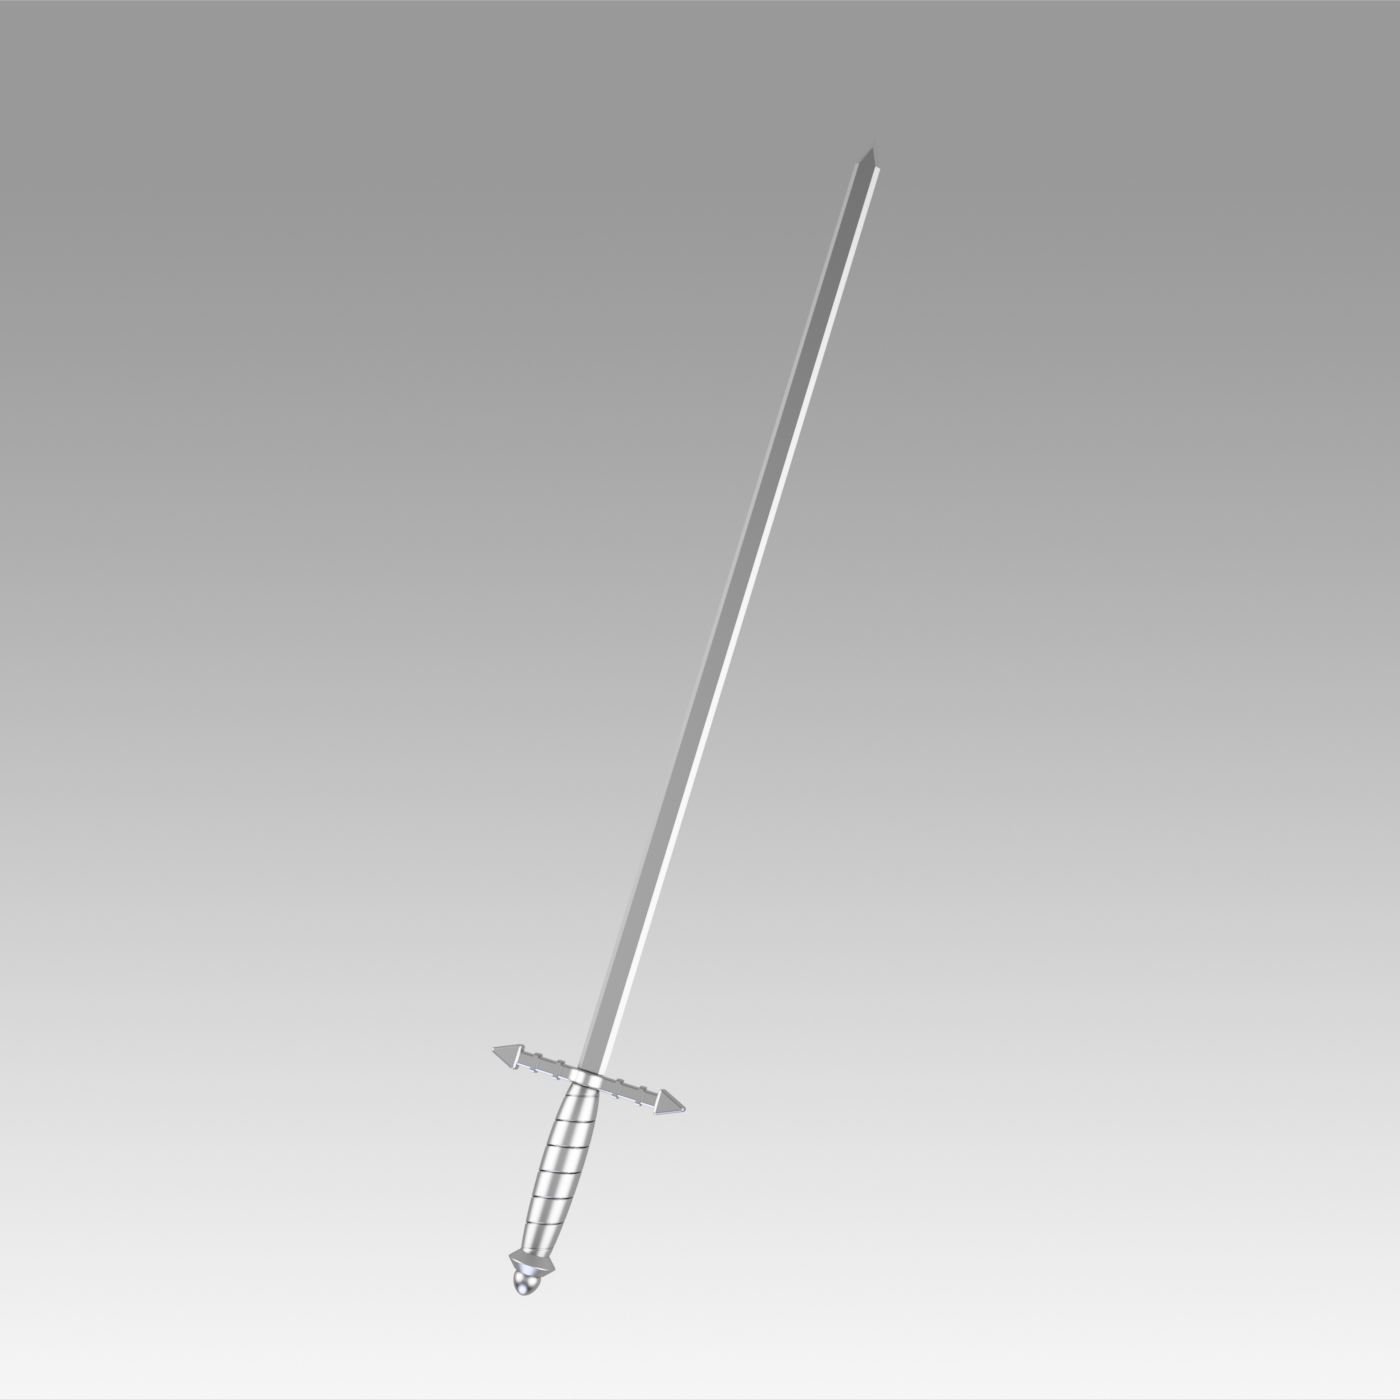 Castlevania alucard sword